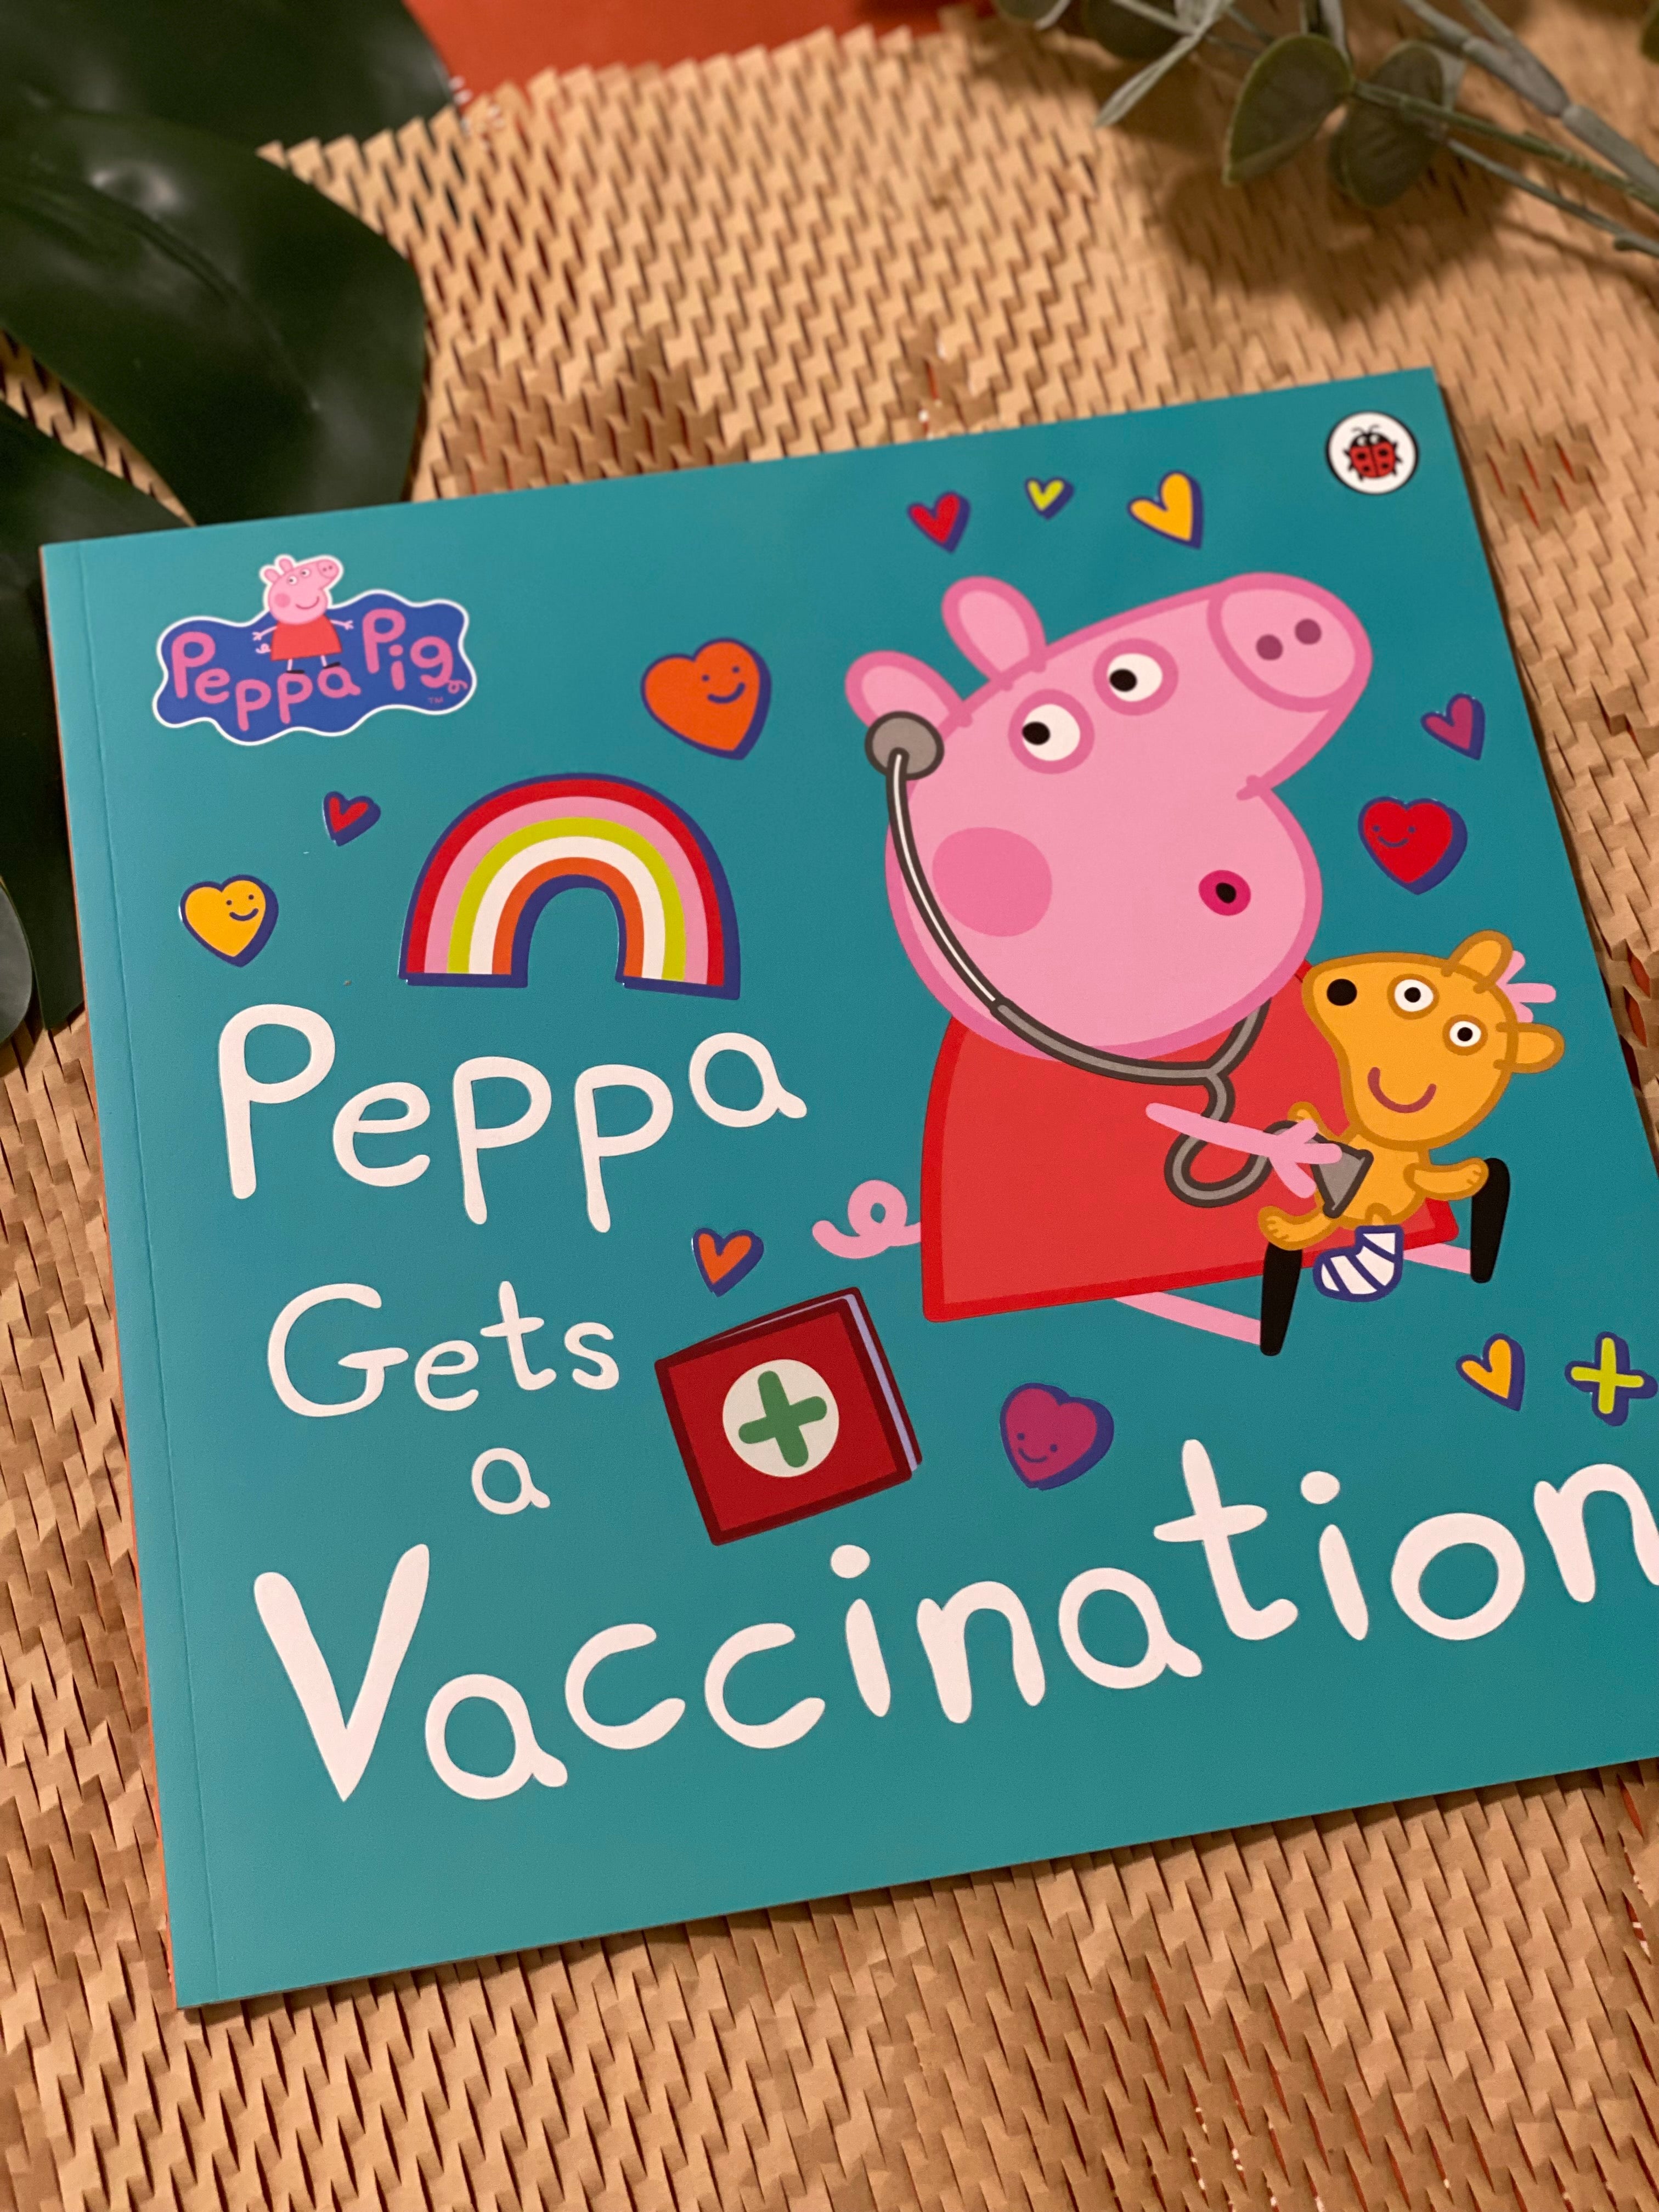 Peppa Pig: Peppa Gets A Vaccination